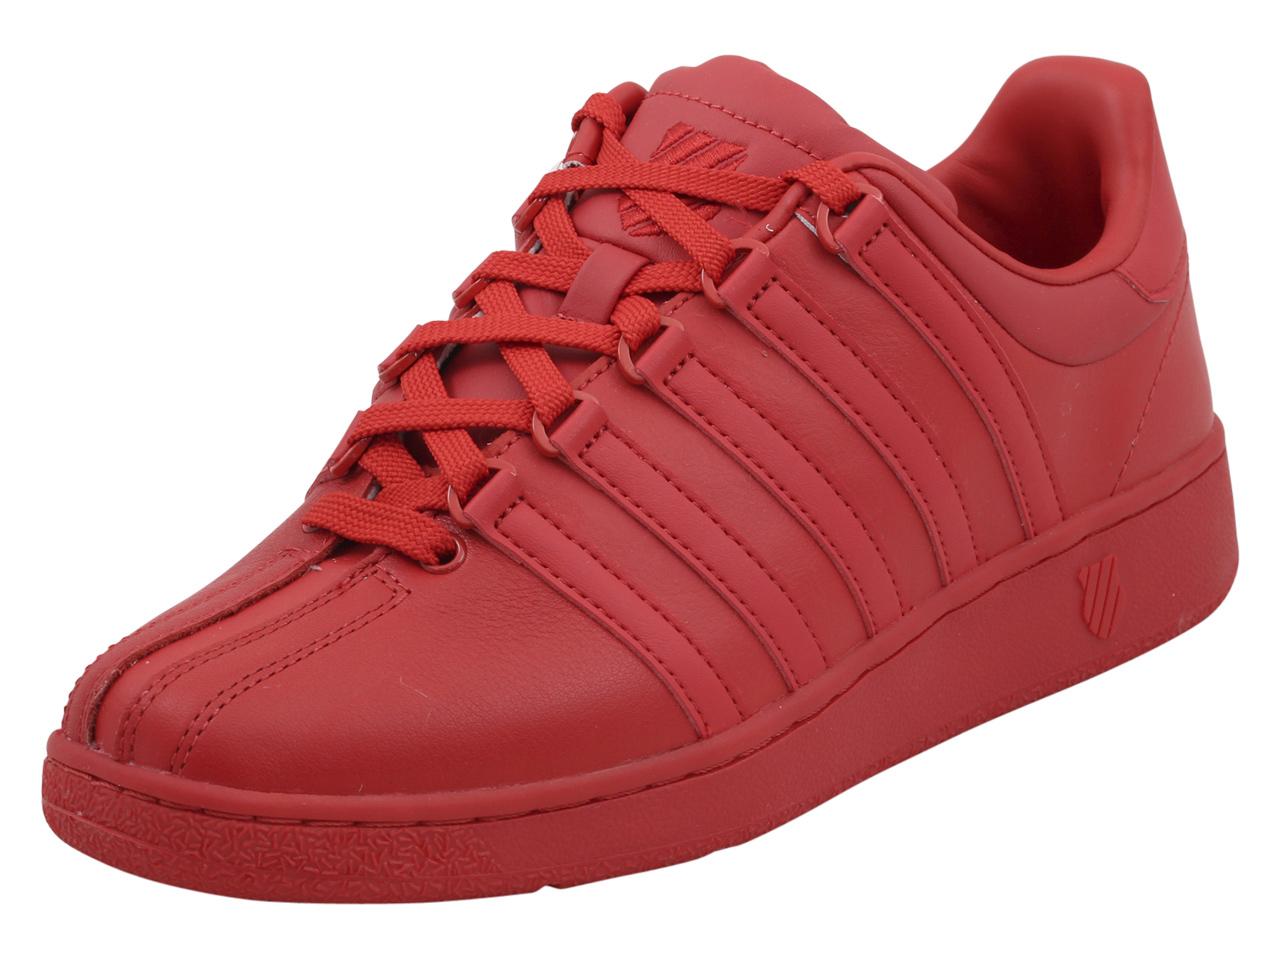 K Swiss Men's Classic VN Sneakers Shoes - Red - 11.5 D(M) US -  K-Swiss